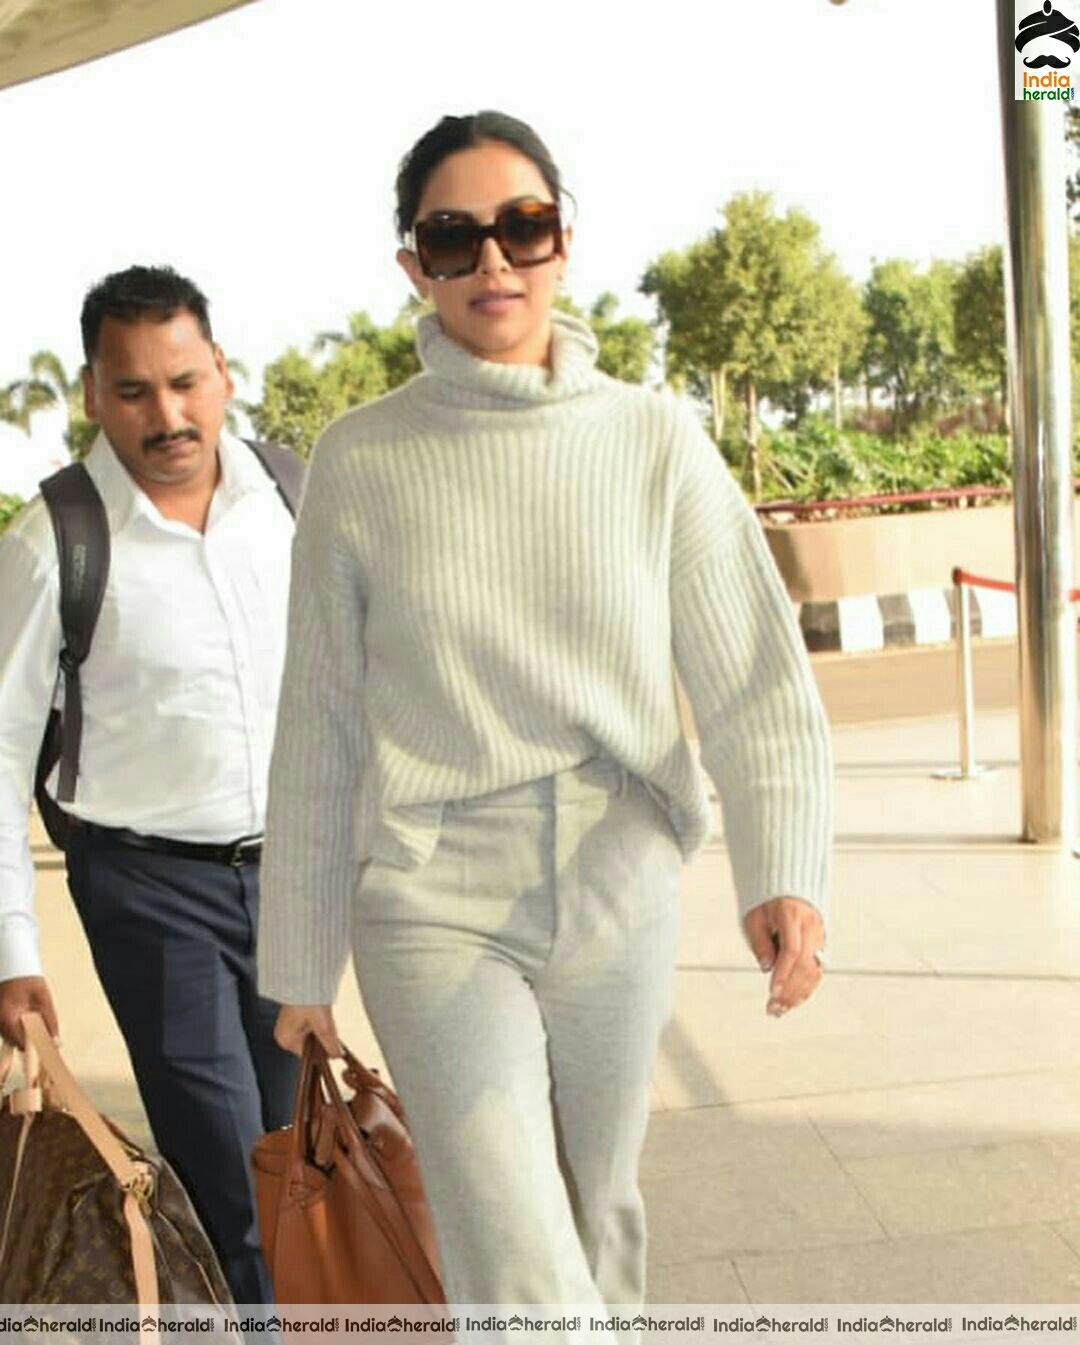 Deepika in her Winter outfit at Mumbai Airport